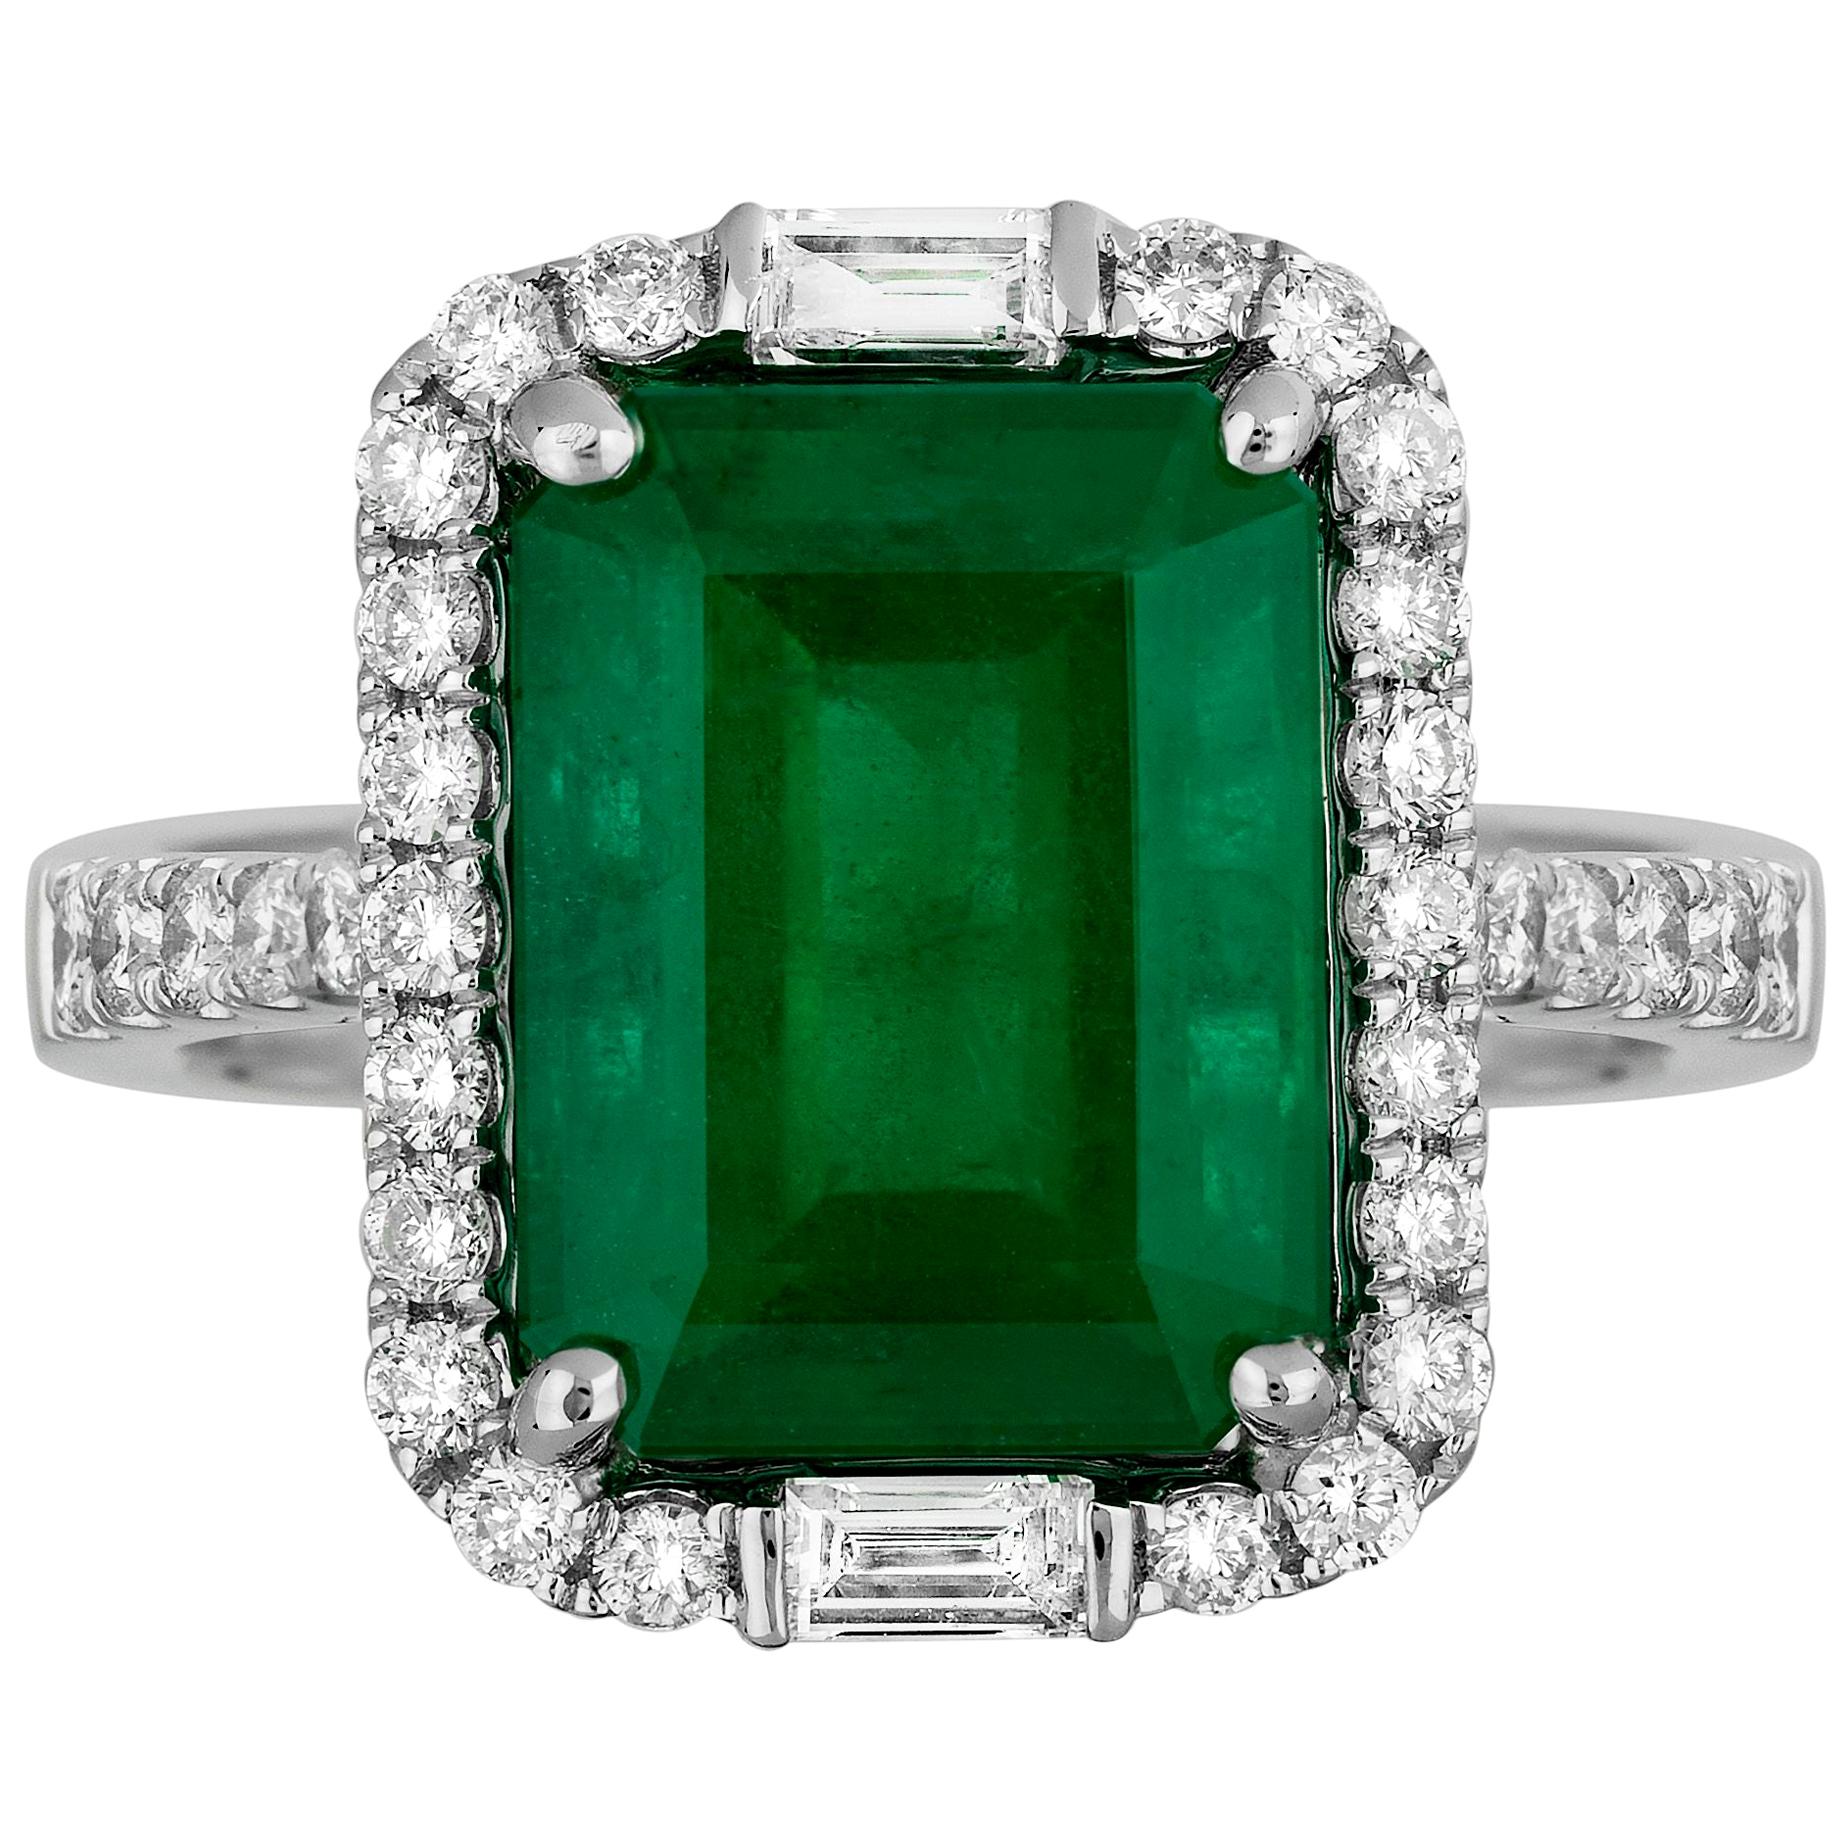 4.72 Carat Emerald Diamond Cocktail Ring